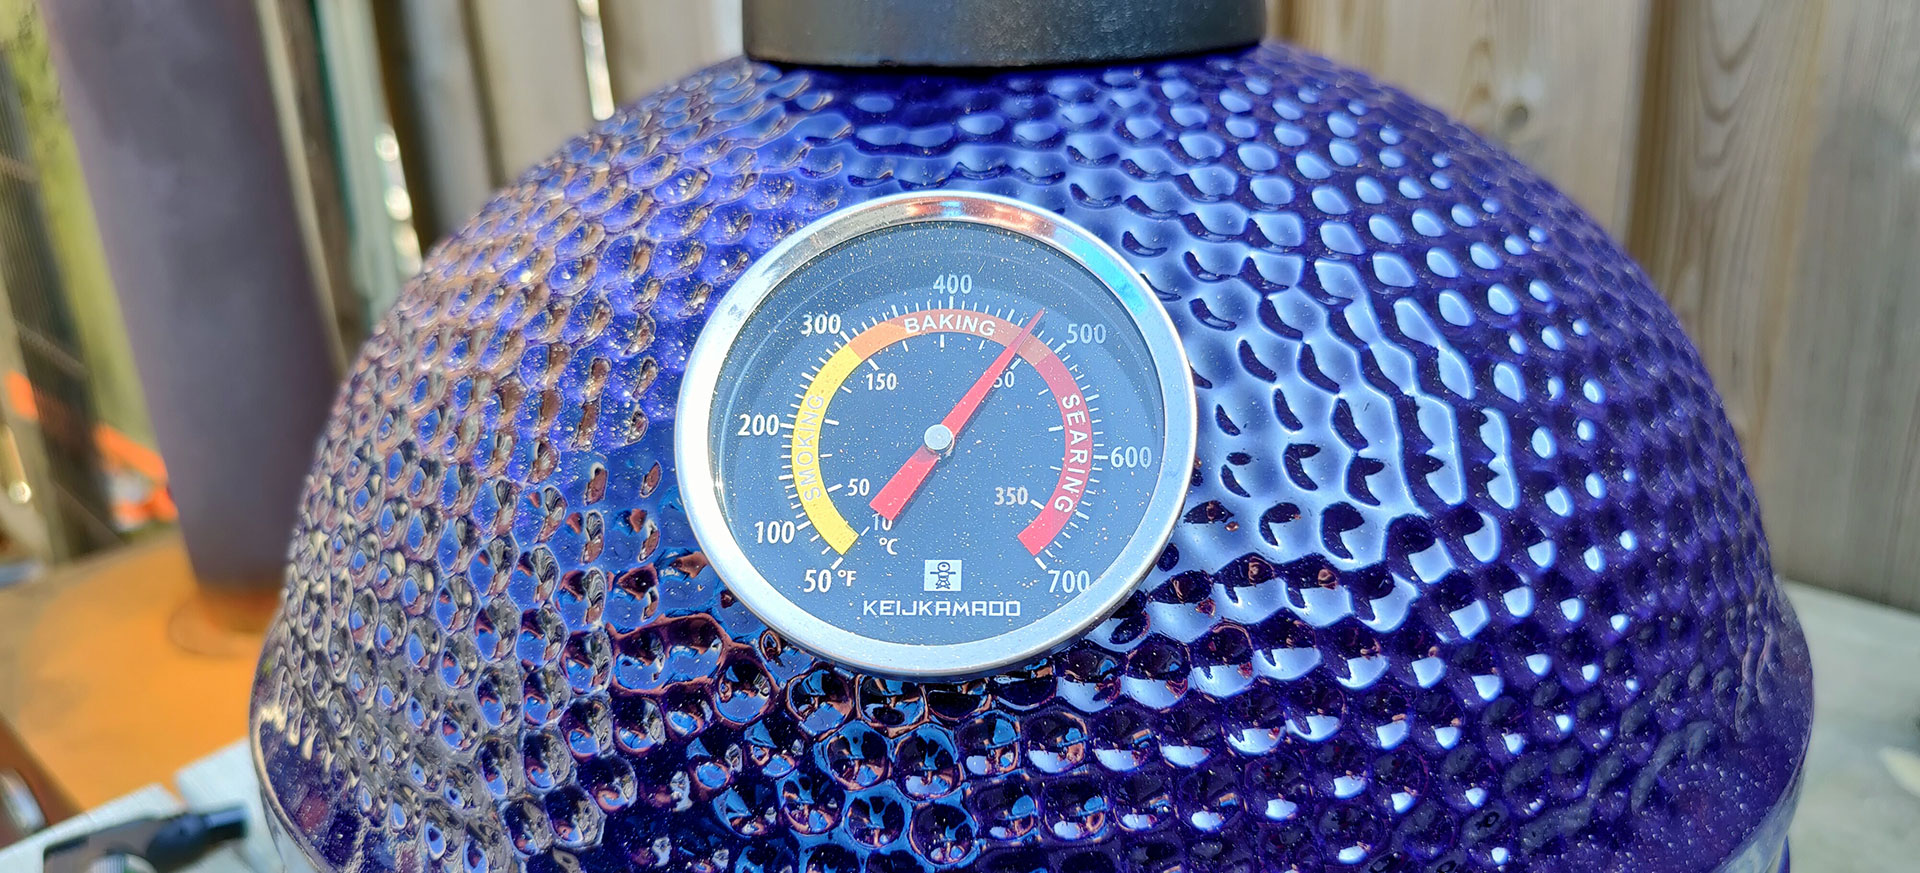 Keij Kamado BBQ Blue Compact Thermometer